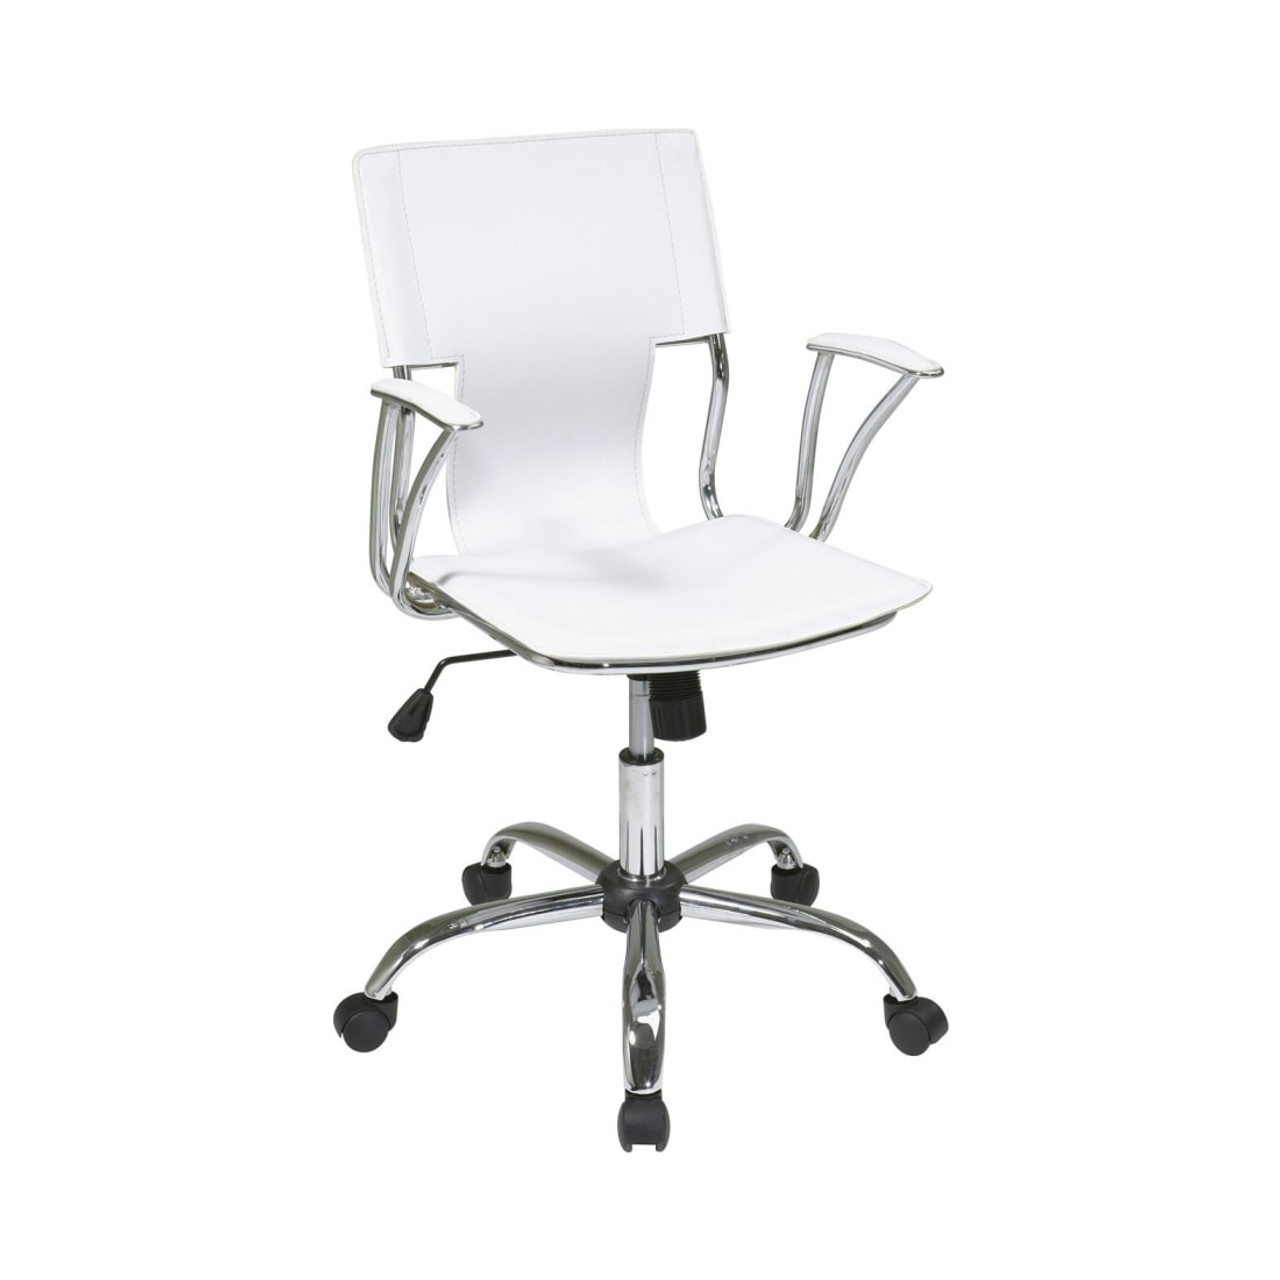 Dorado Office Chair in White Vinyl and Chrome Finish